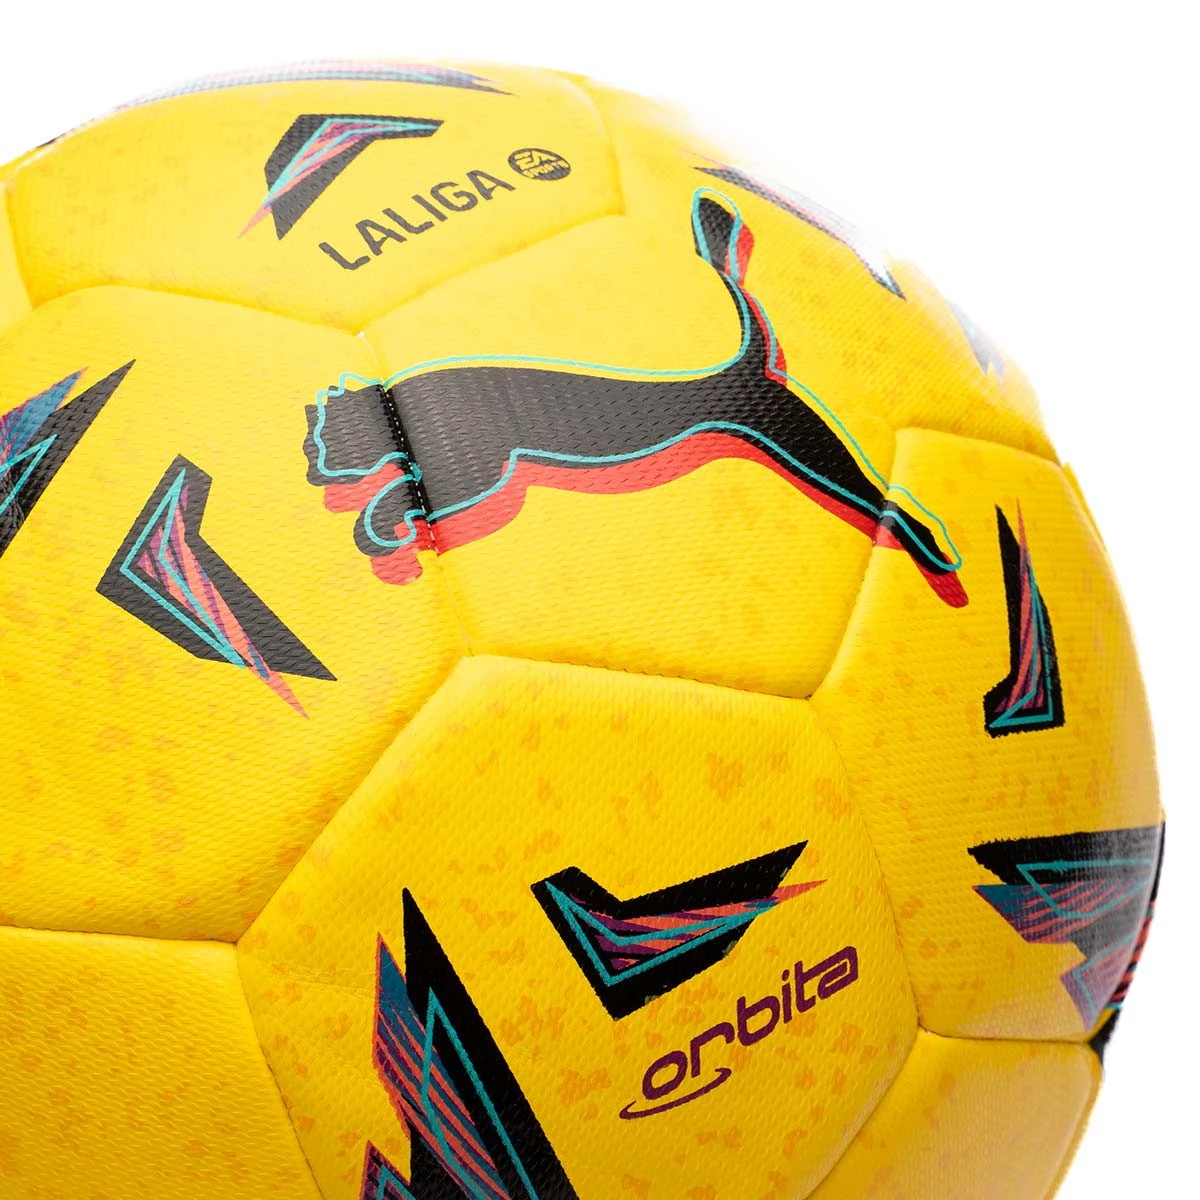 unboxing Balon la liga easport Puma orbita 2023-24 / puma ball la liga 